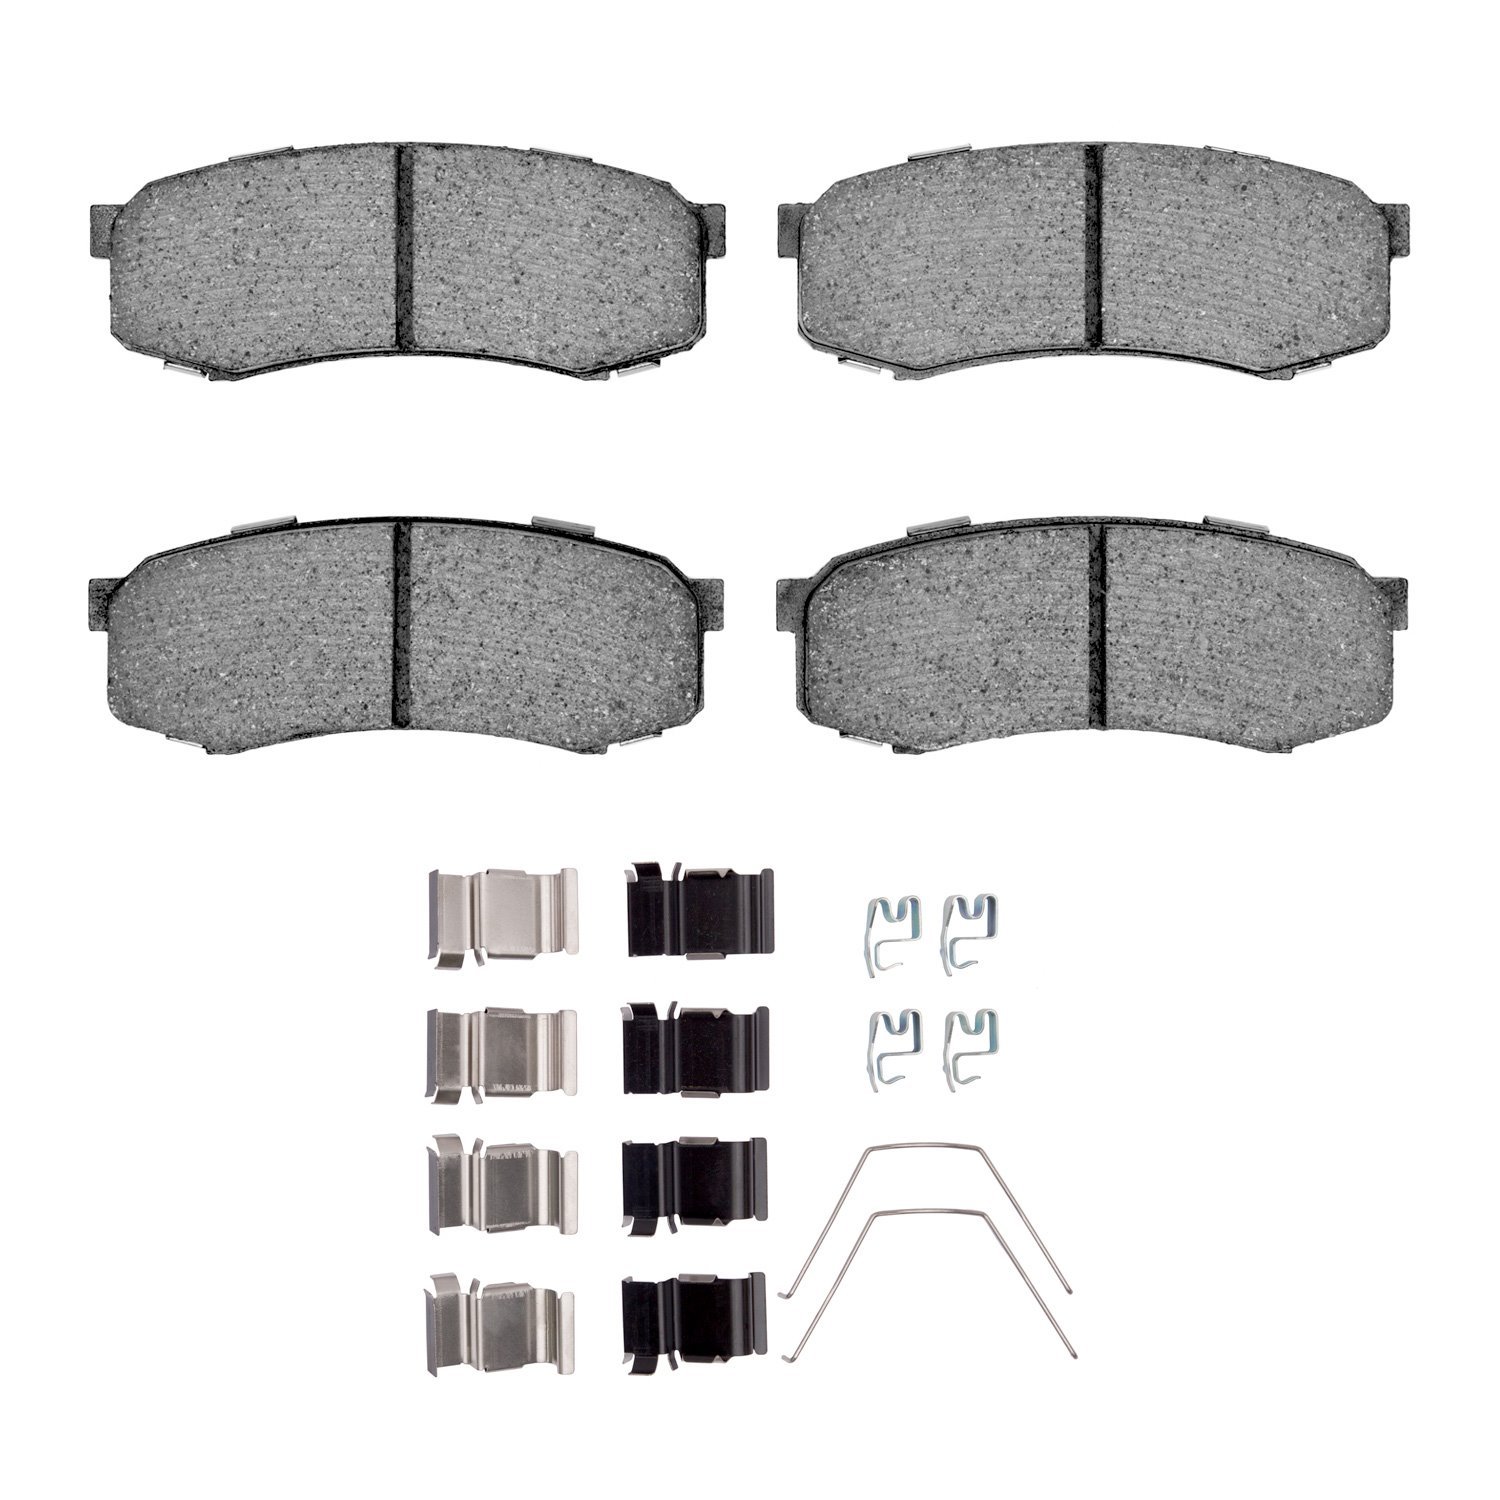 1551-0606-01 5000 Advanced Ceramic Brake Pads & Hardware Kit, Fits Select Multiple Makes/Models, Position: Rear